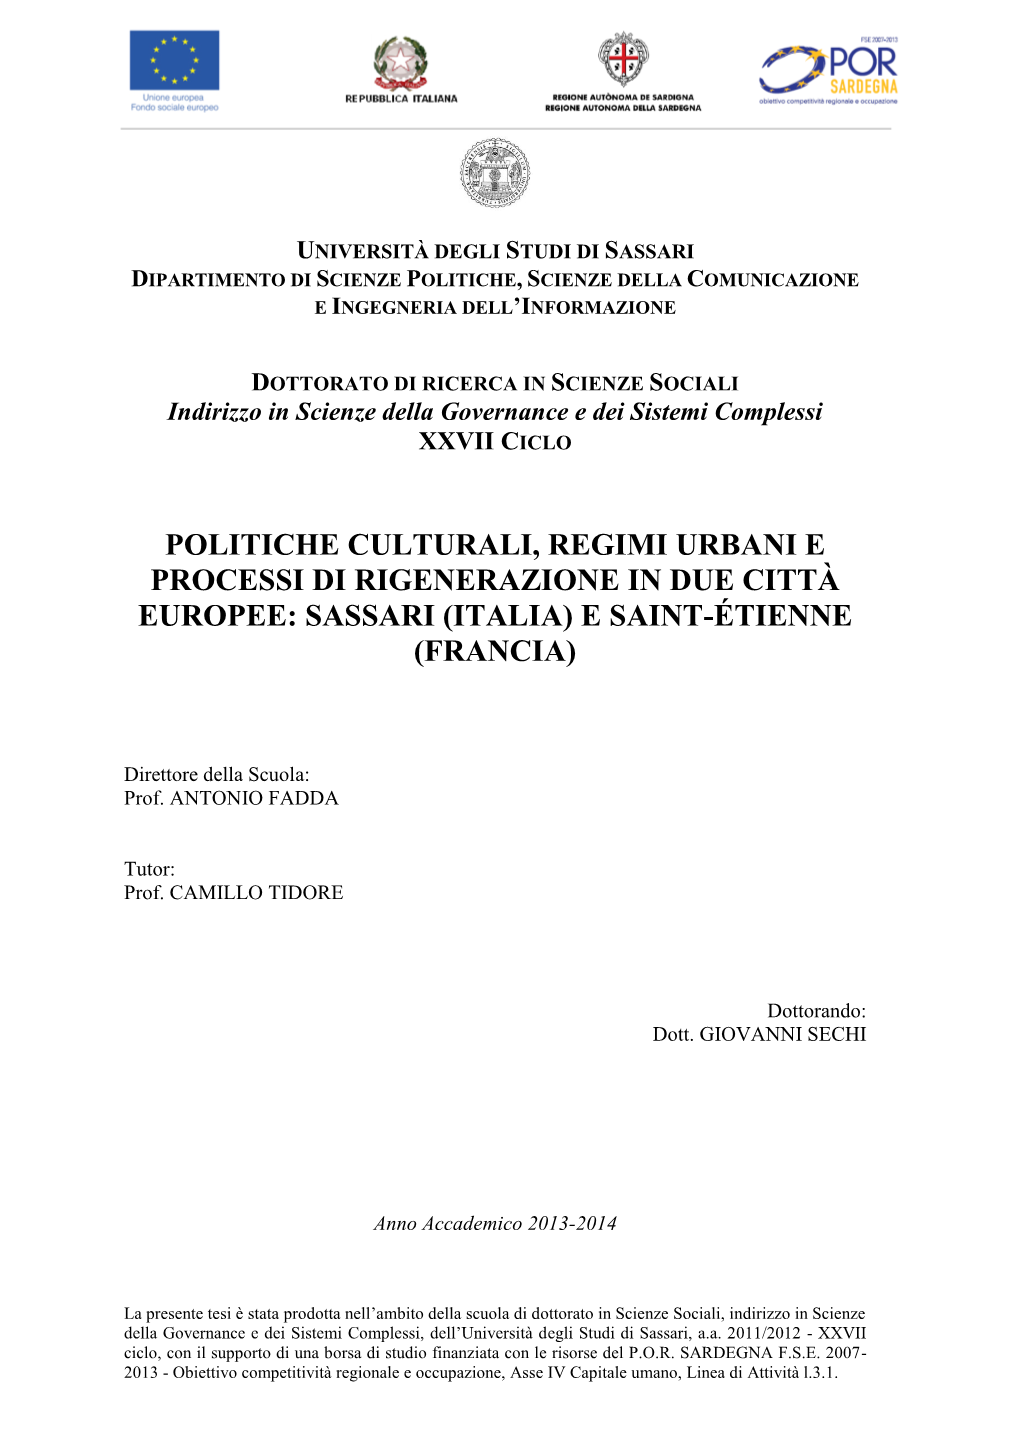 Politiche Culturali, Regimi Urbani E Processi Di Rigenerazione in Due Città Europee: Sassari (Italia) E Saint-Étienne (Francia)